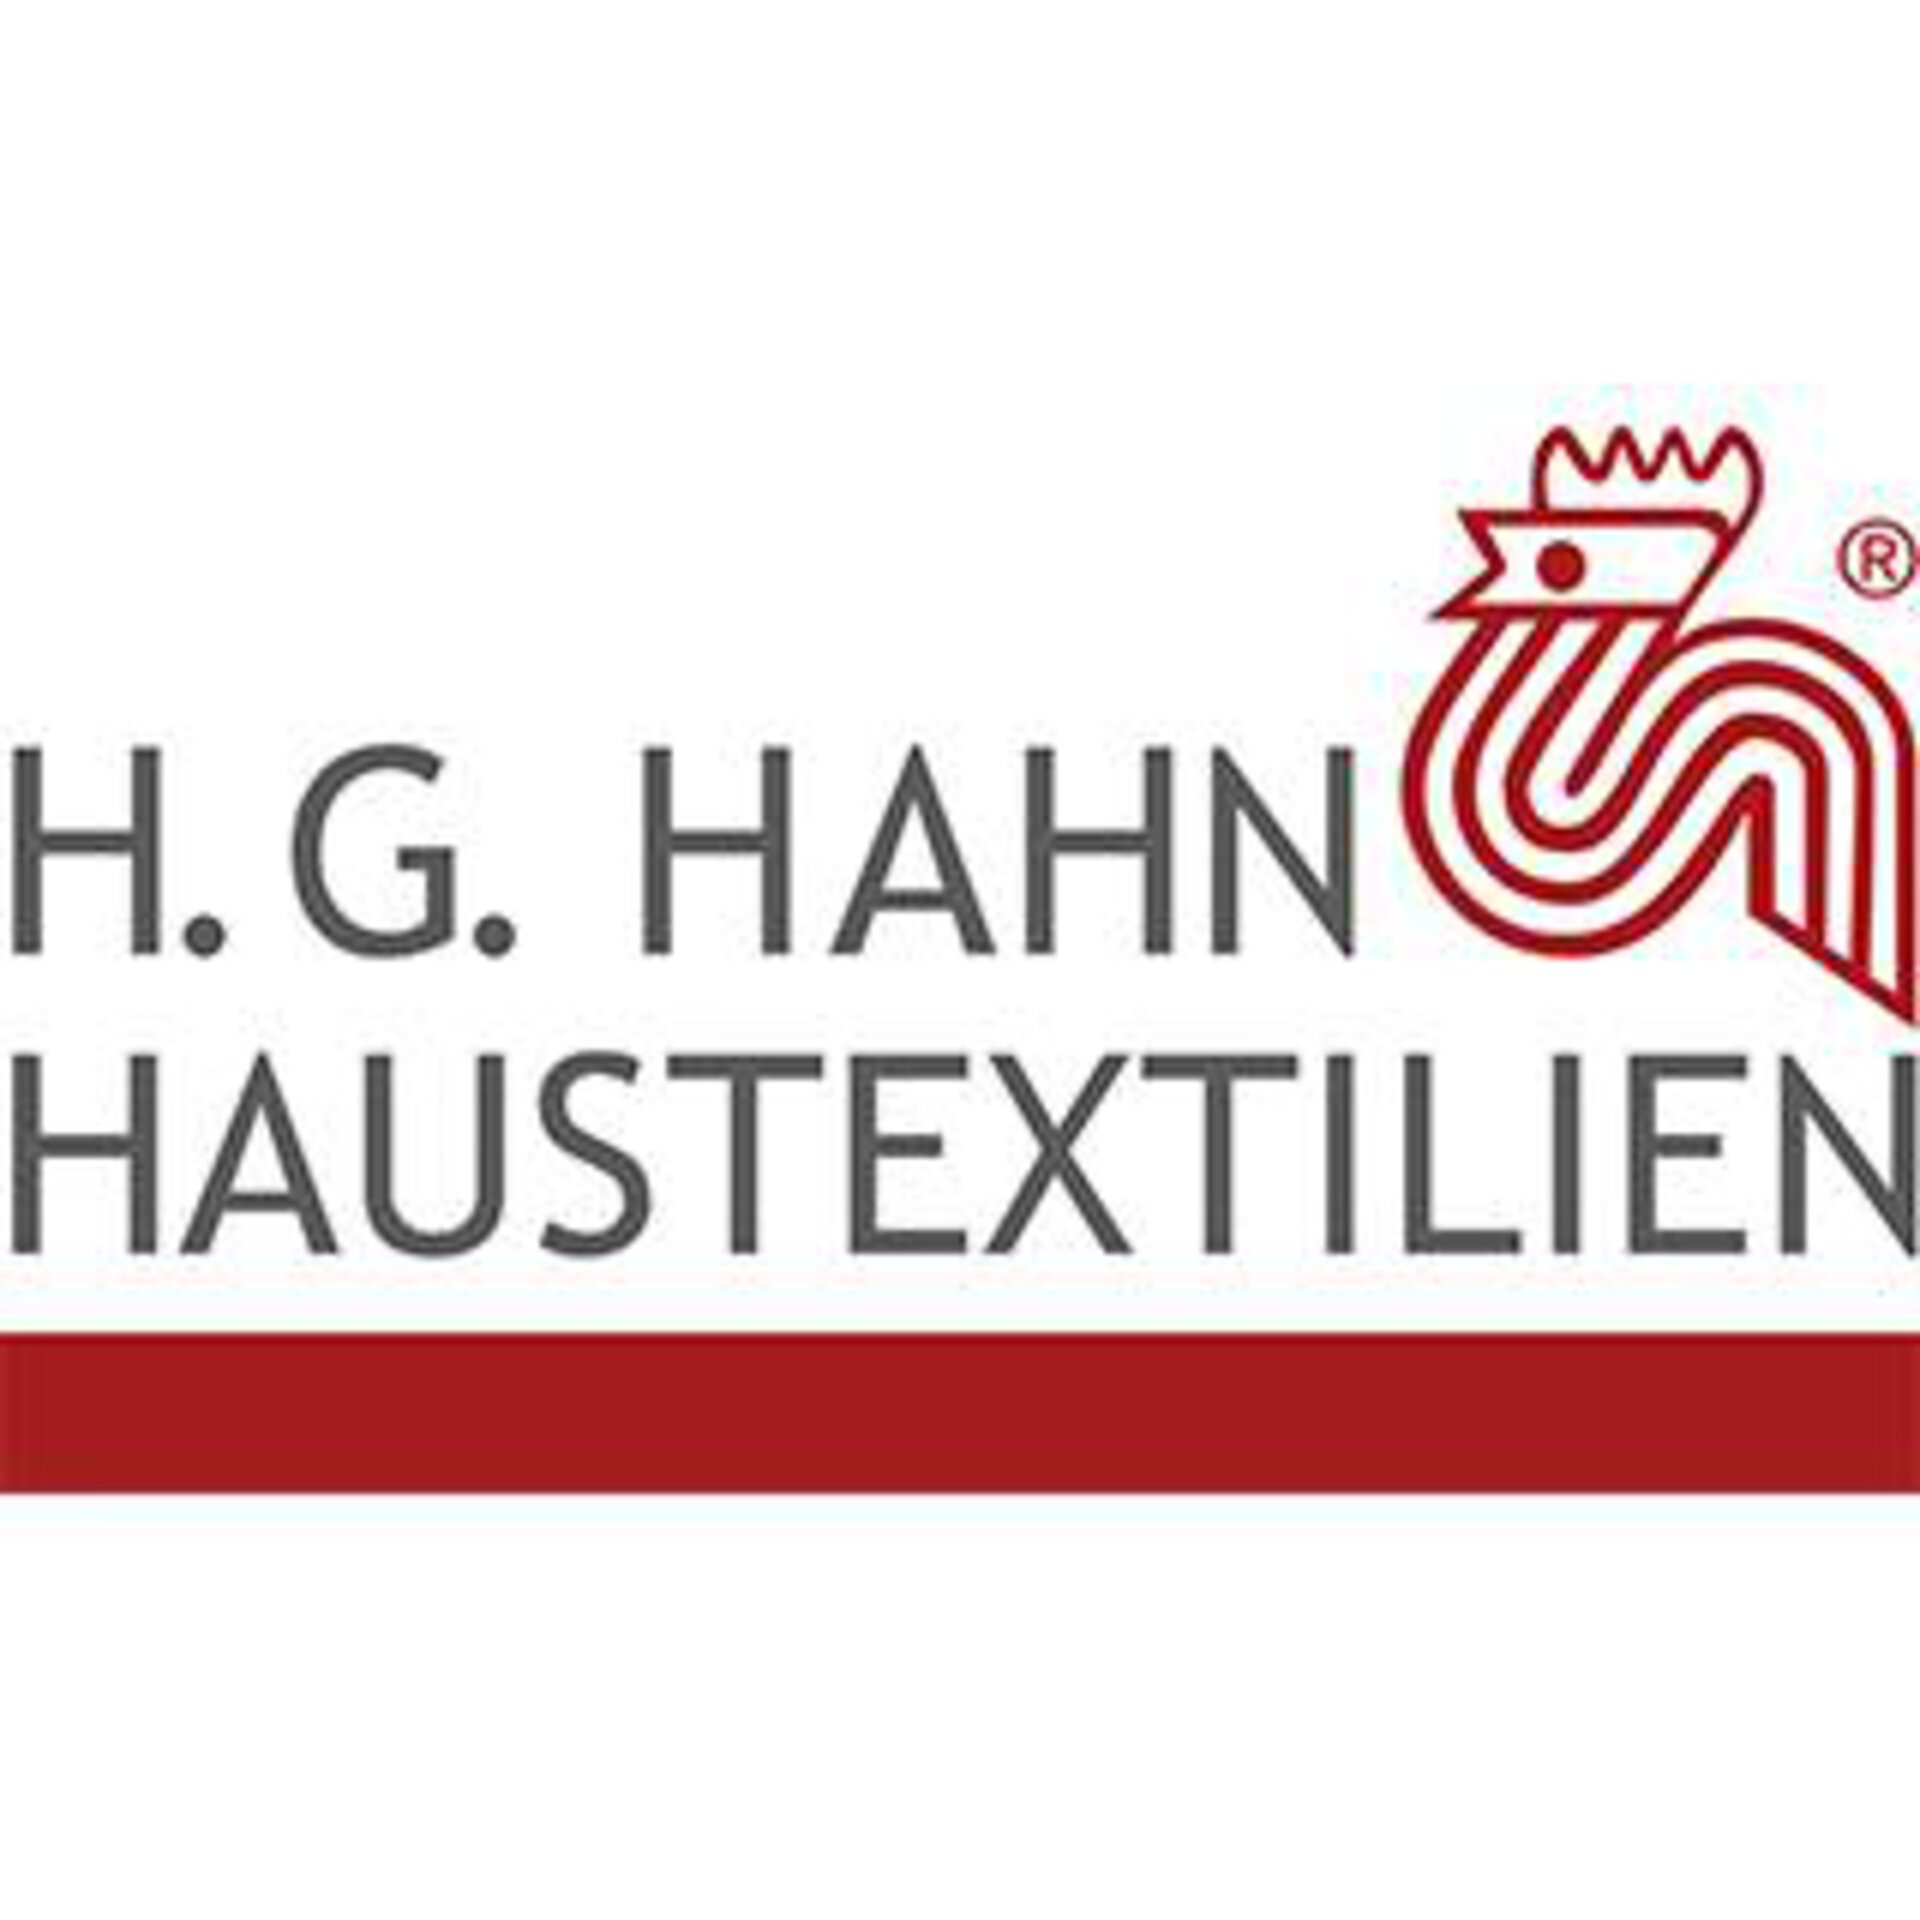 H. G. Hahn Haustextilien Logo